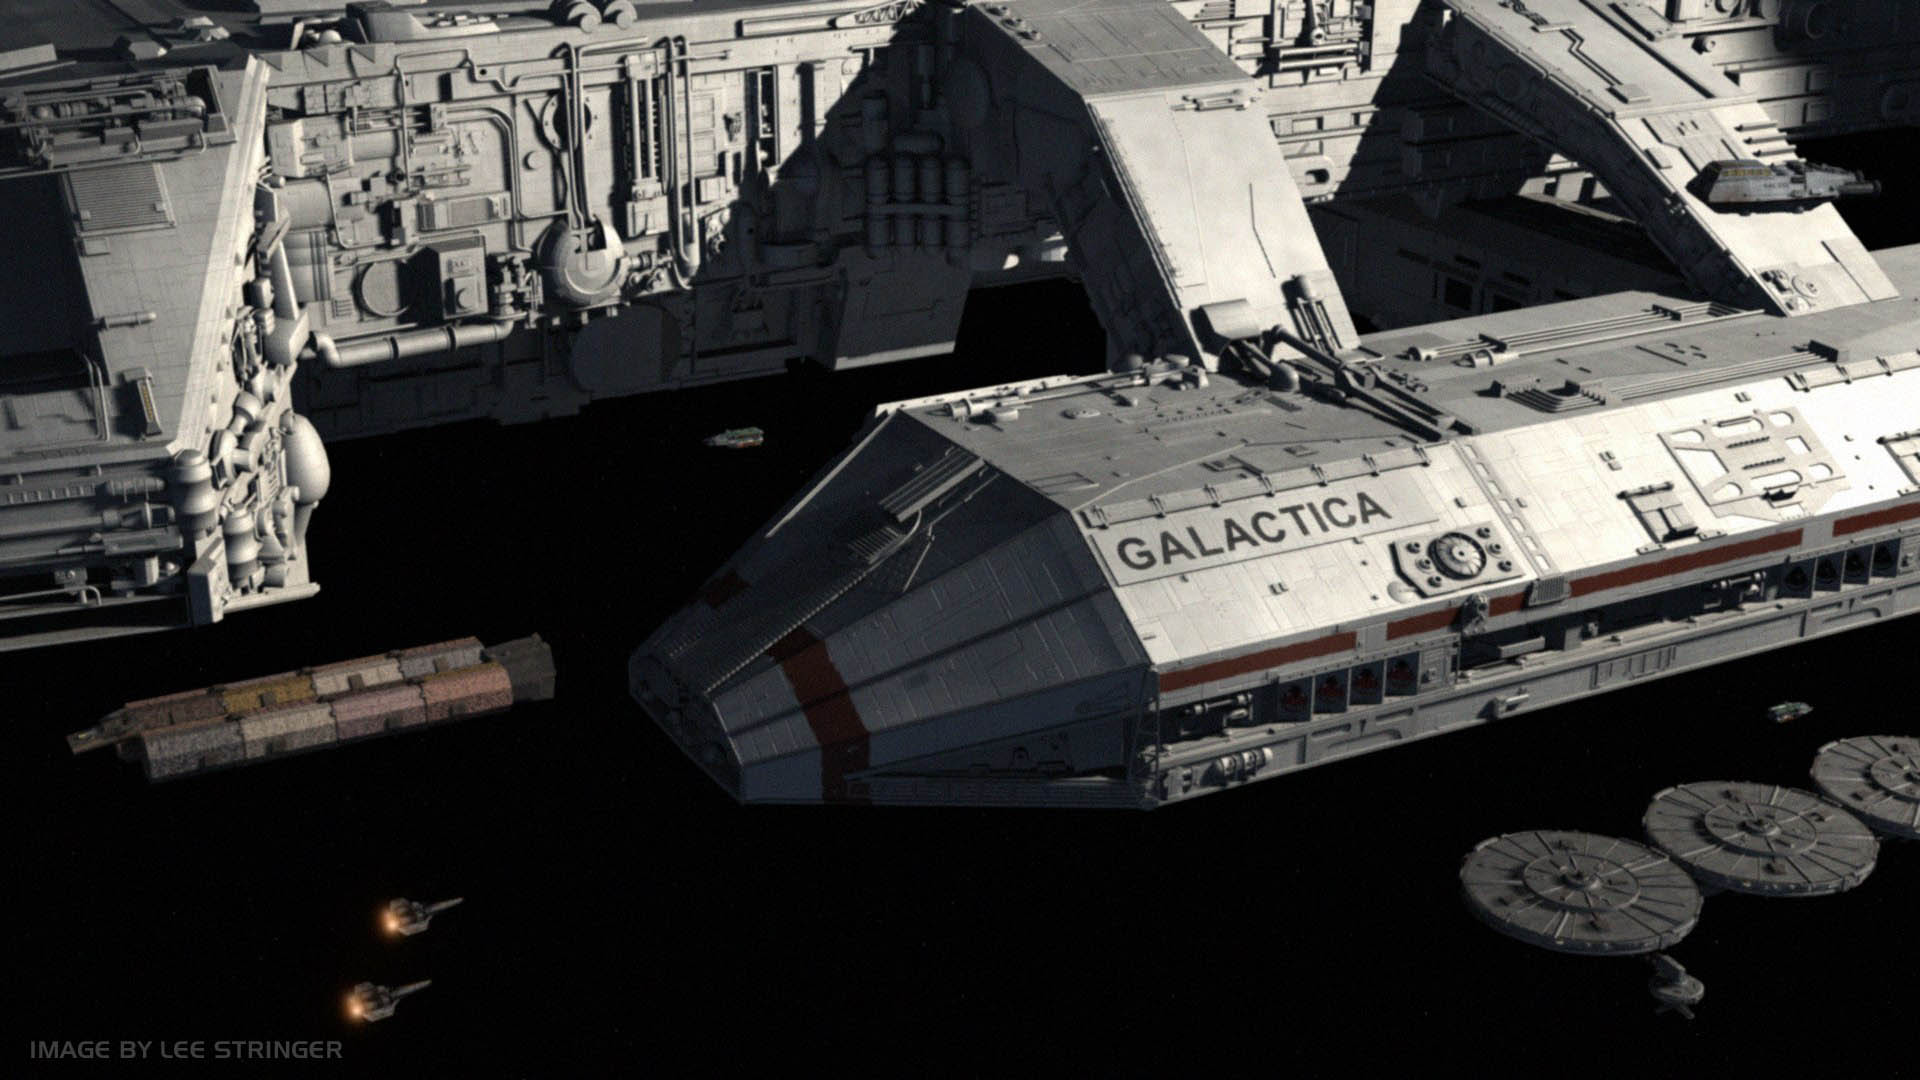 картинки и скриншоты онлайн игры Battlestar Galactica